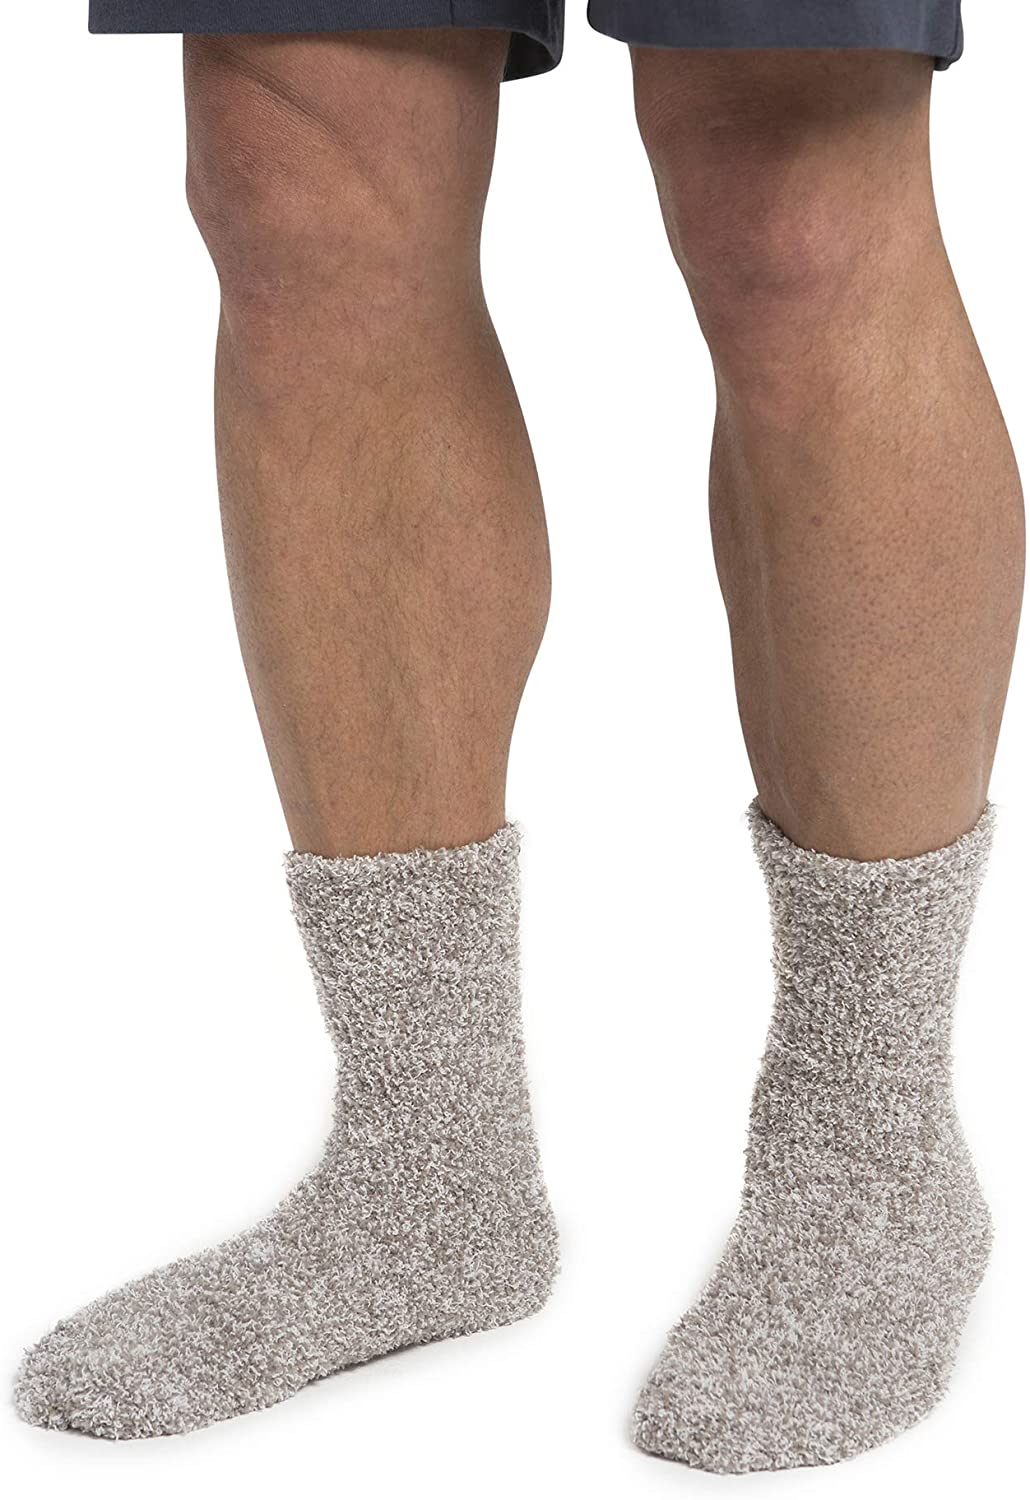 BAREFOOT DREAMS CozyChic Heathered Men's Socks in Warm Grey/White